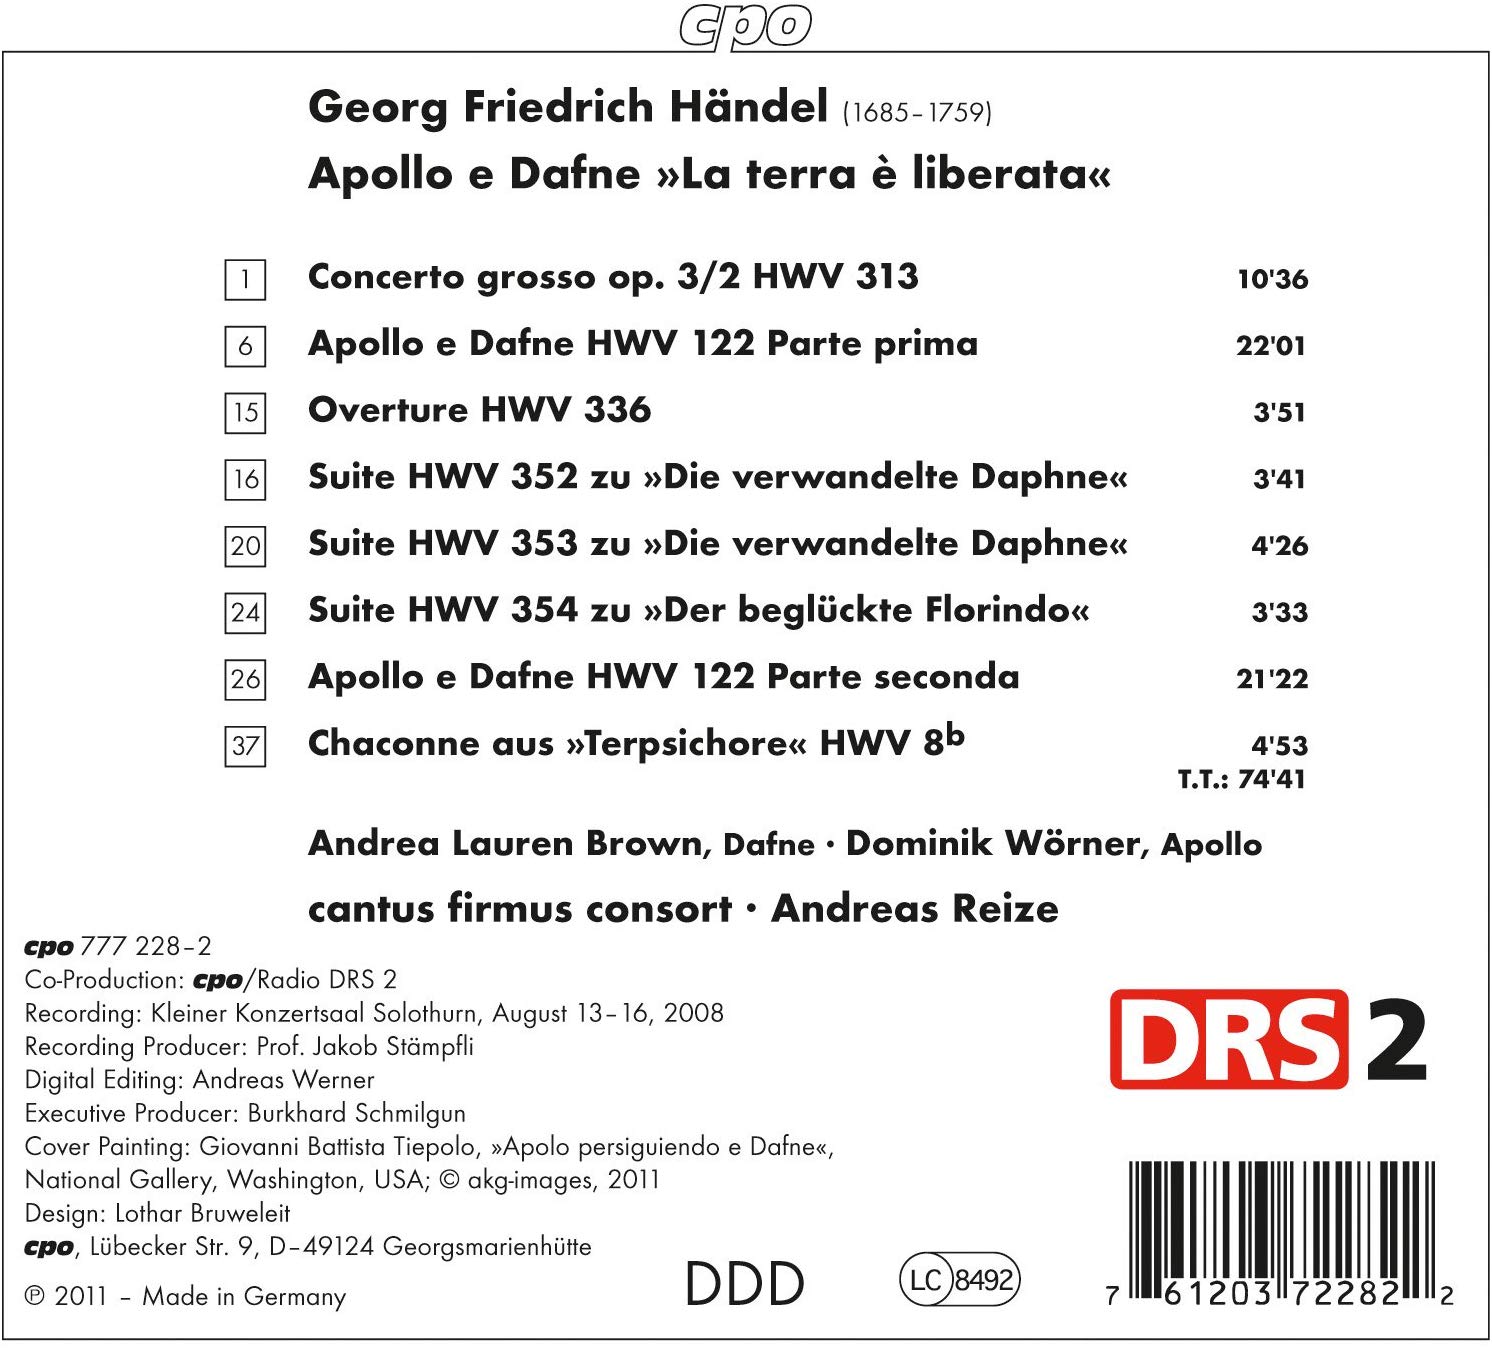 Handel: Apollo e Dafne, Concerto grosso op. 3/2, Overture, Suites - slide-1